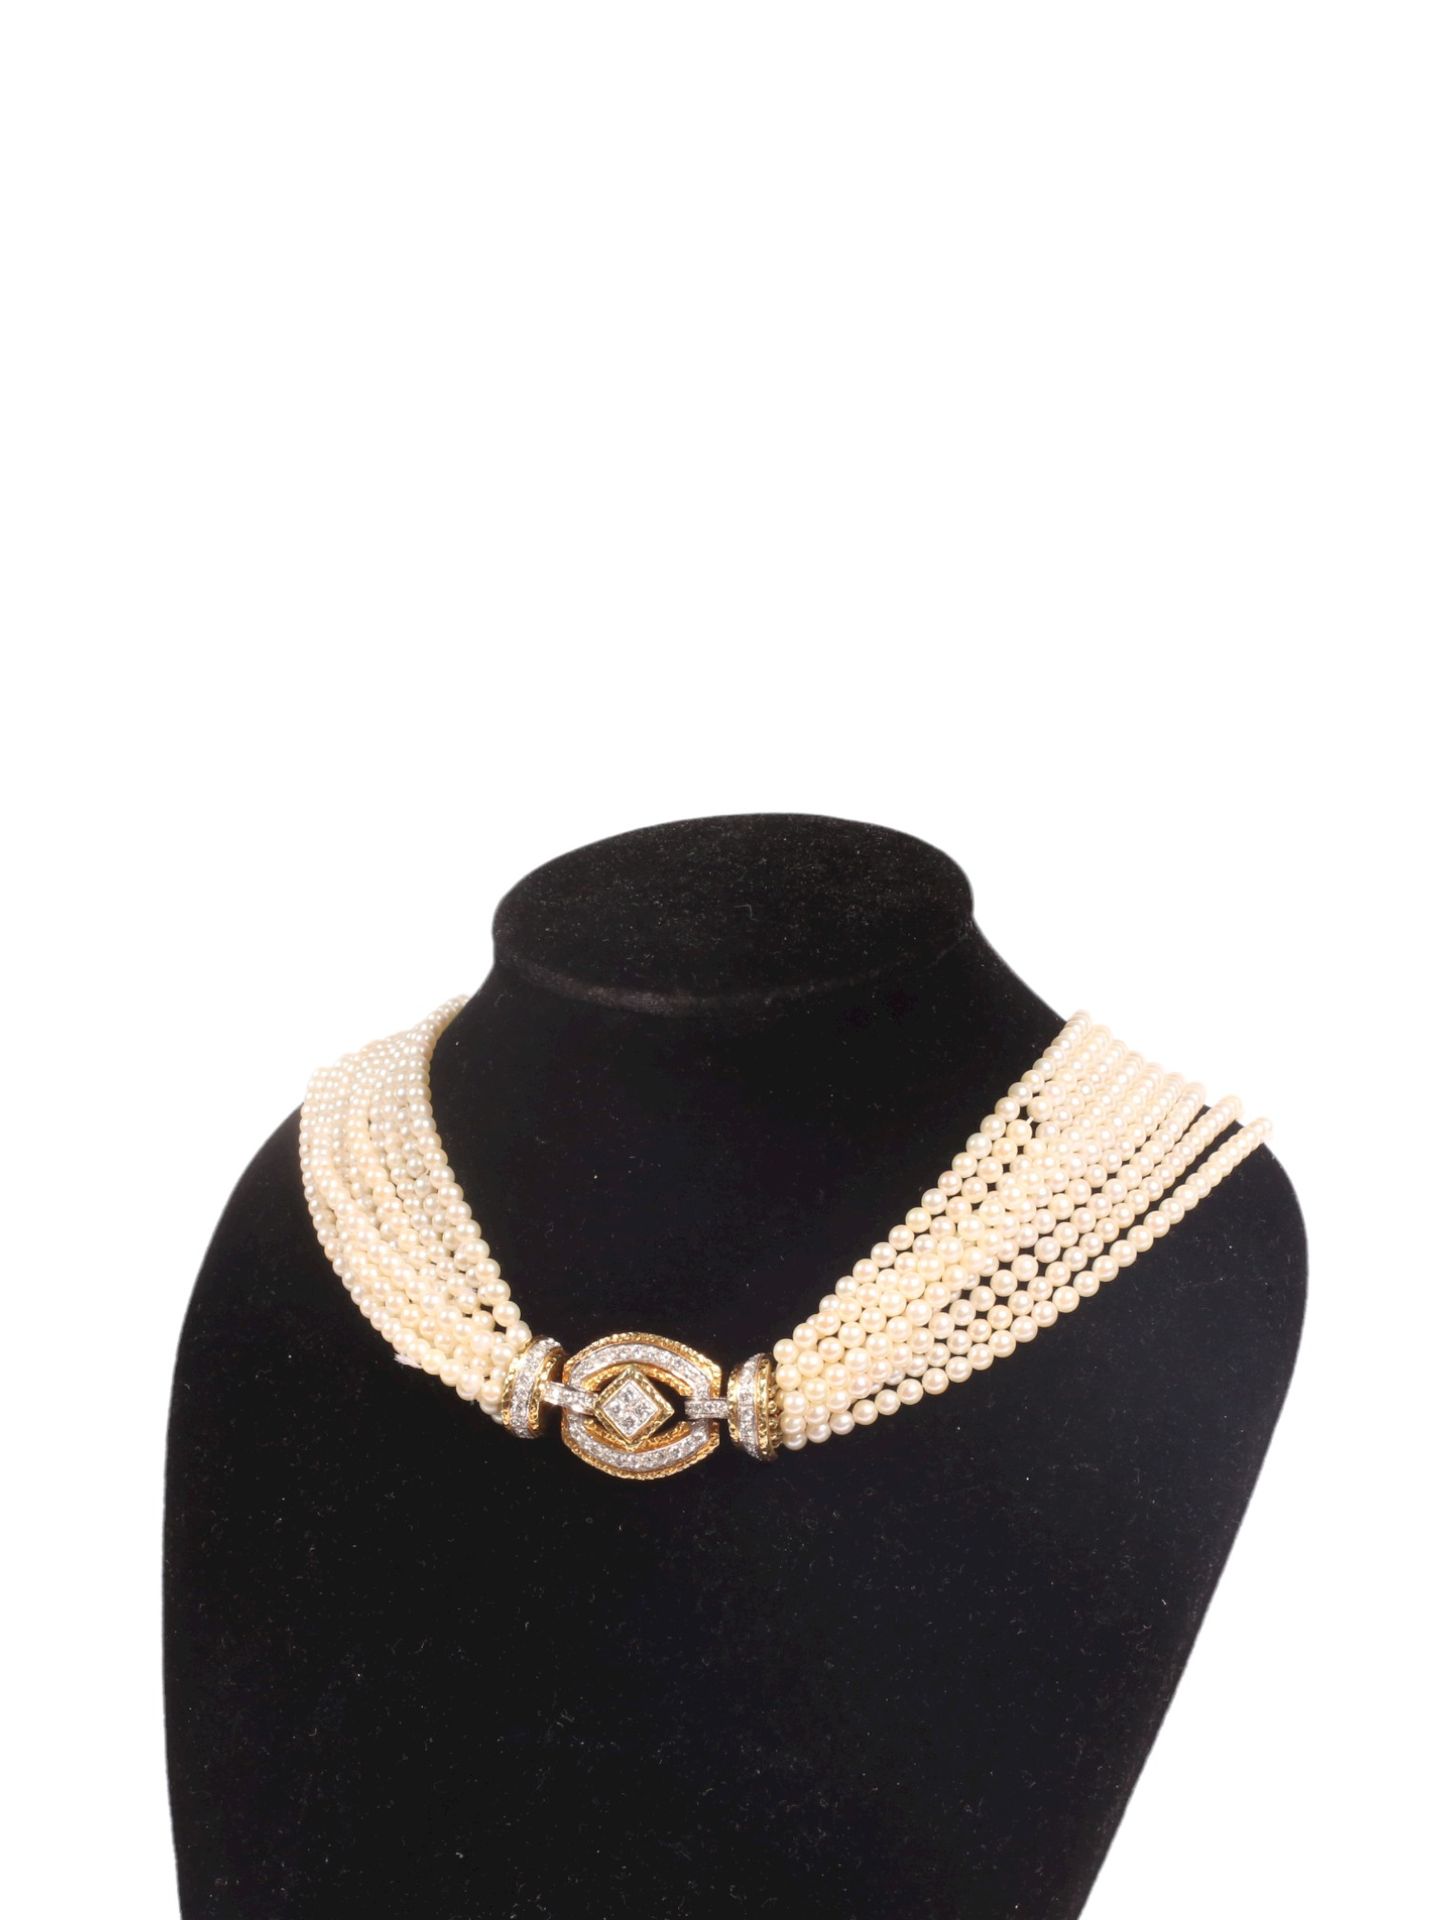 Null *九排珍珠项链，18K黄金和白金的扣子，铺设钻石

毛重：93克